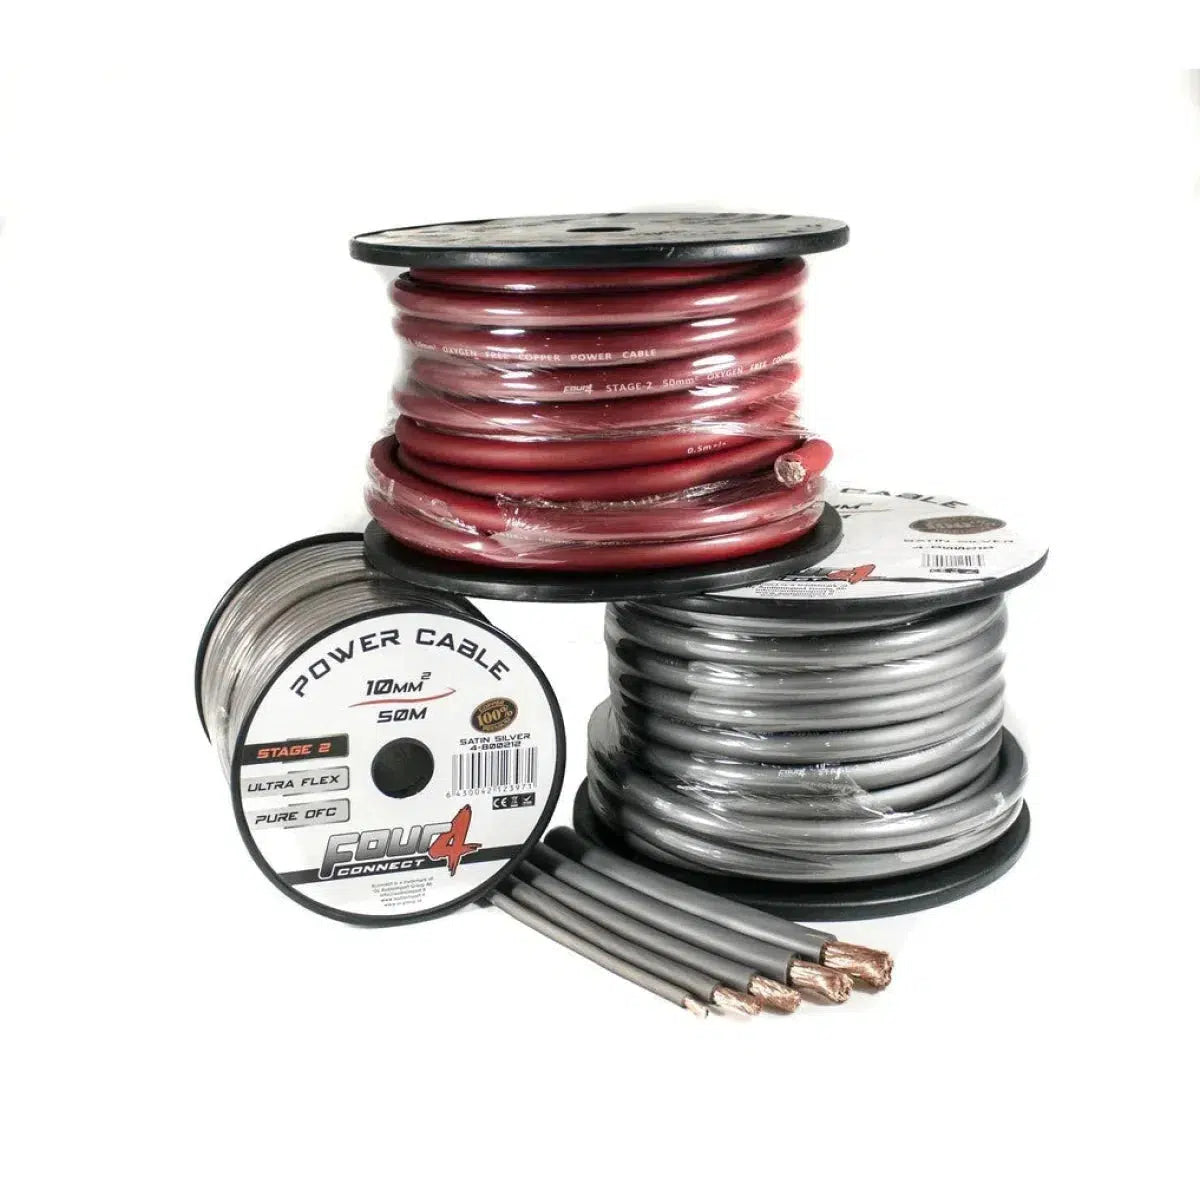 Four Connect-Stage2 10mm² OFC Ultra-Flex 50m (B-goods)-10mm² power cable-Masori.de